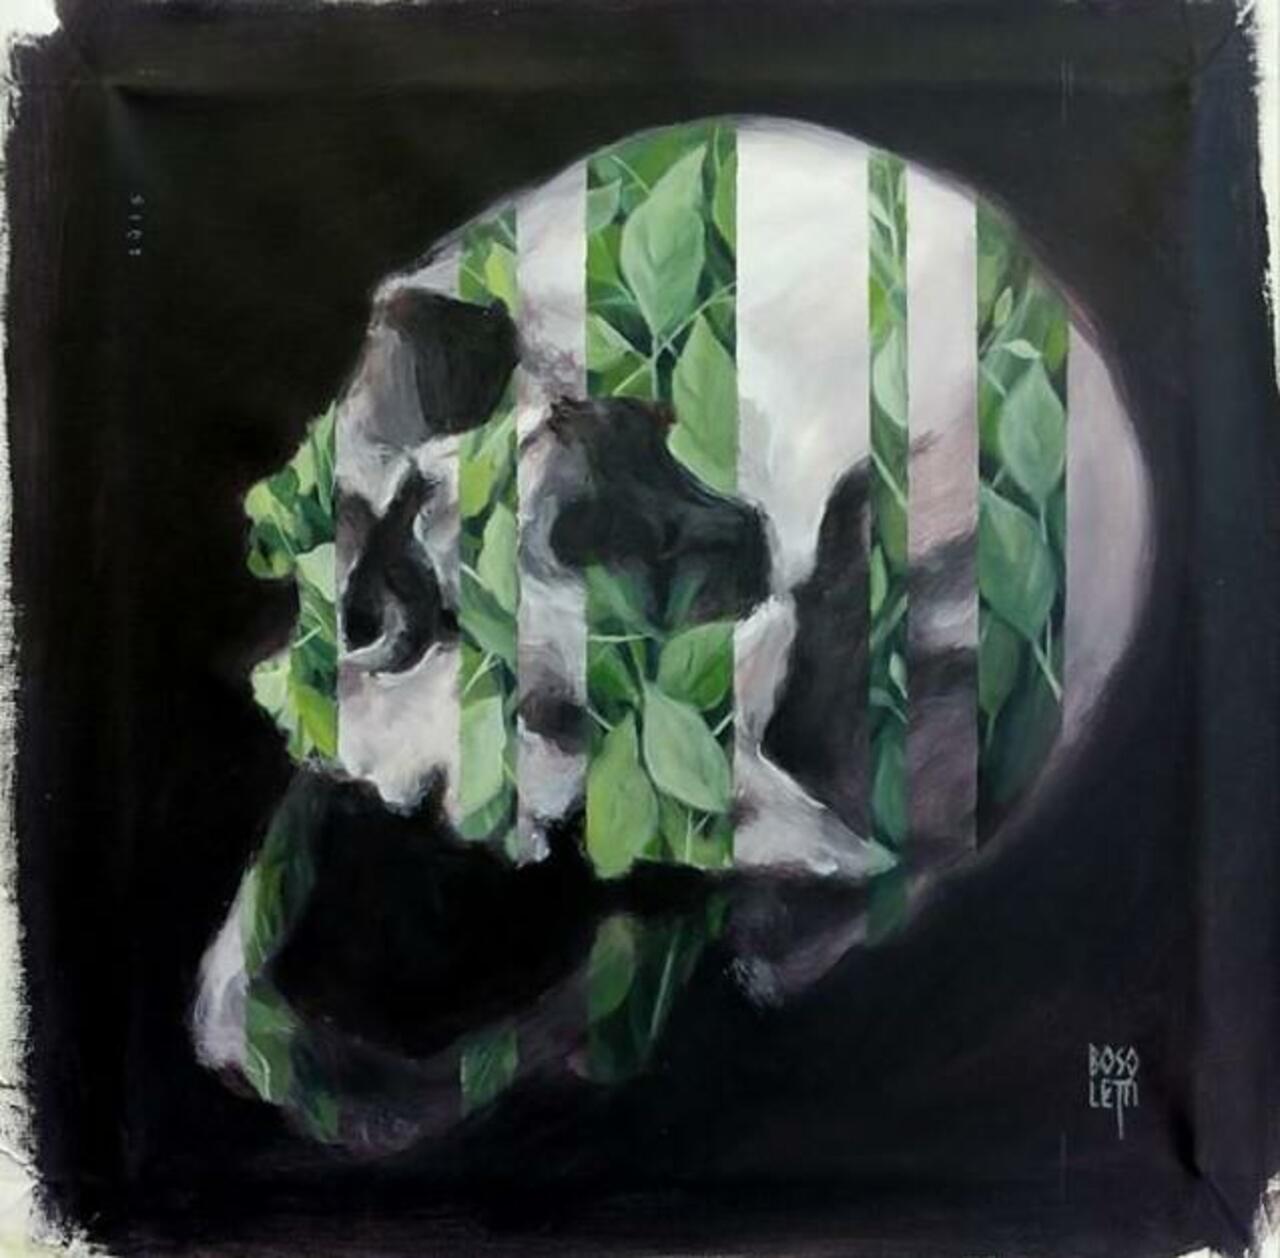 RT @DavidBonnand: Skull study, 2015
by #Bosoletti (1988-....)
#streetart #graffiti #Art http://t.co/sBygKiGwos